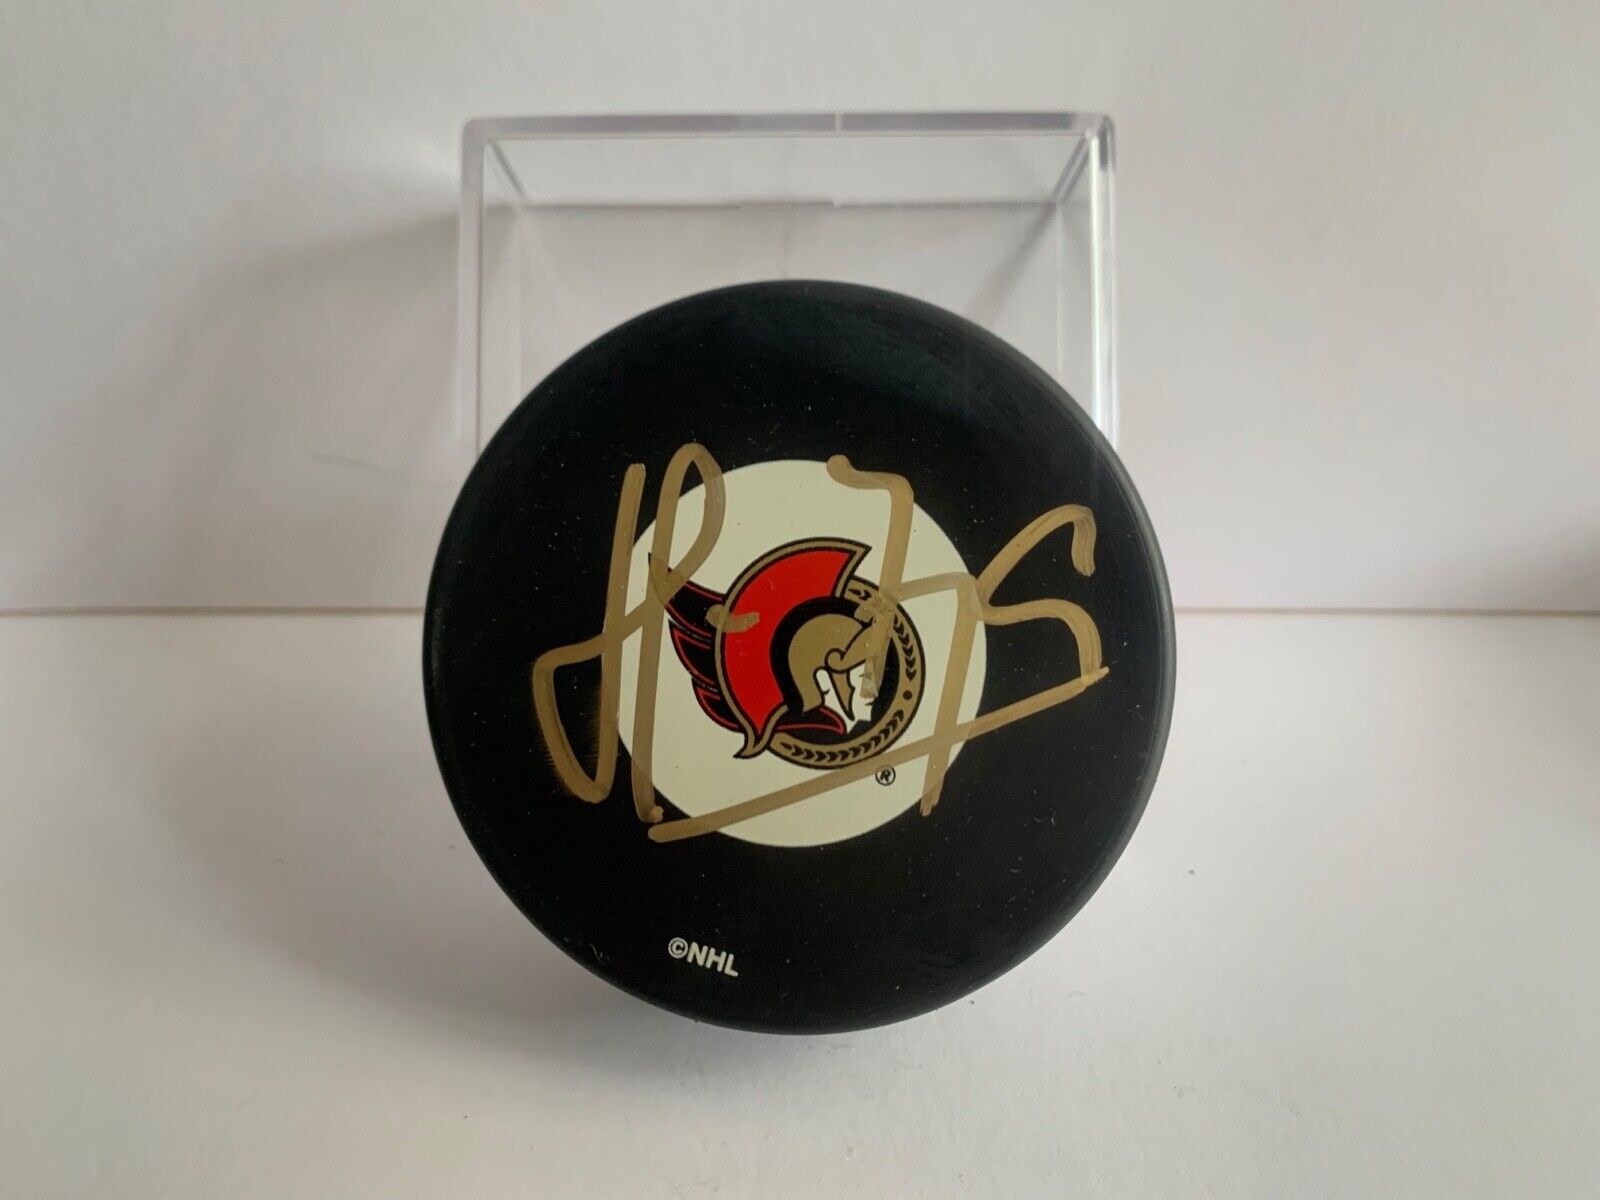 Jan Hlavac Ottawa Senators Officially Licensed Autographed Hockey Puck NHL